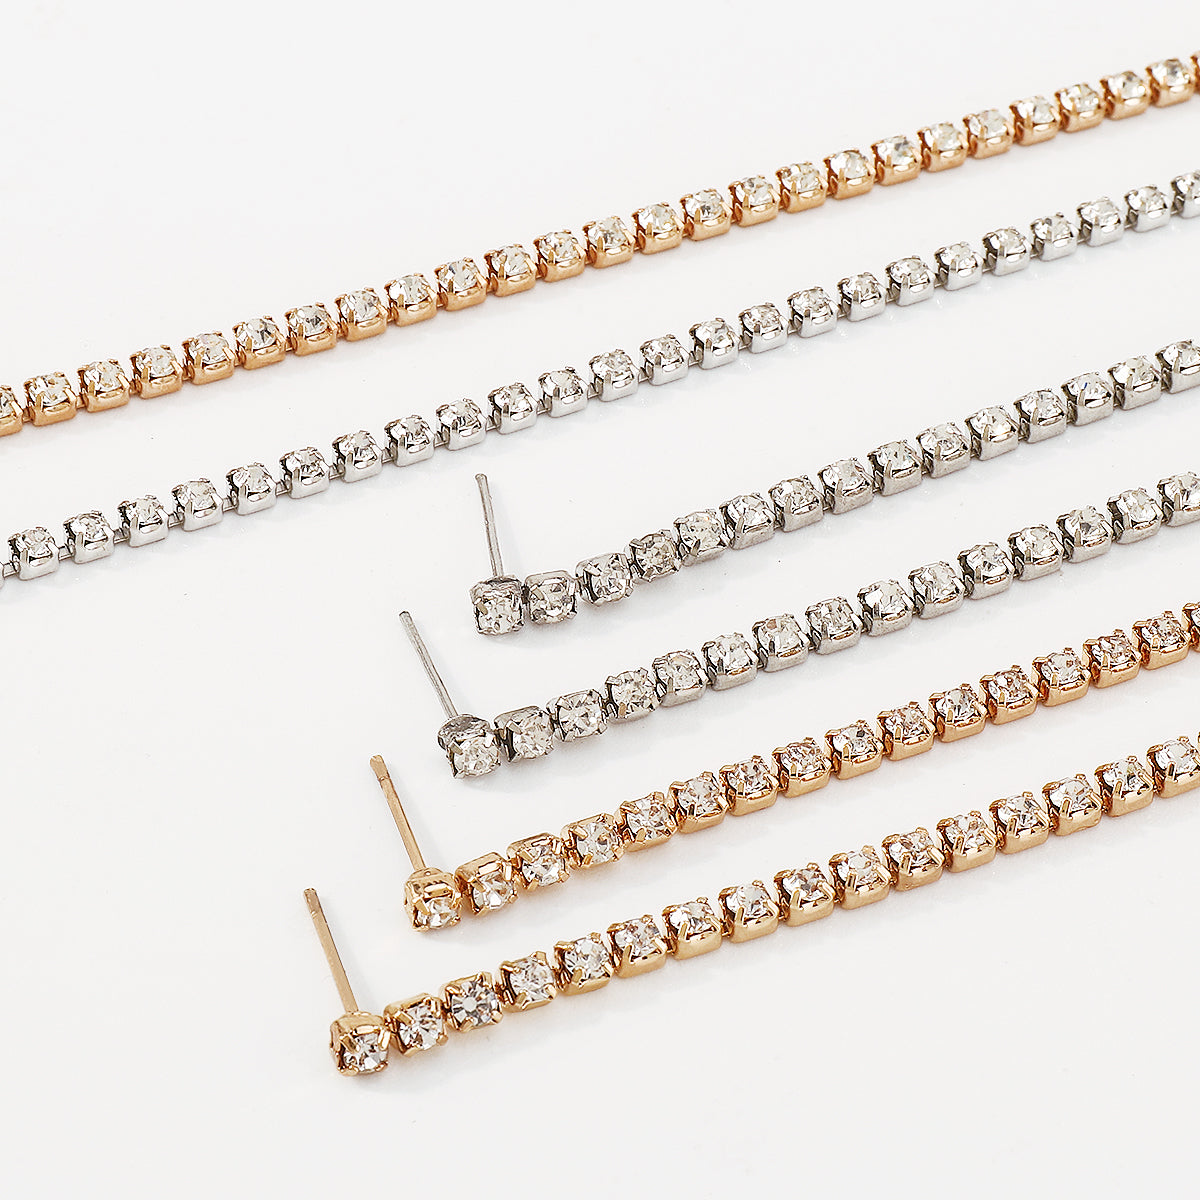 1 Row Shiny Choker Tennis Chain Necklace Set medyjewelry